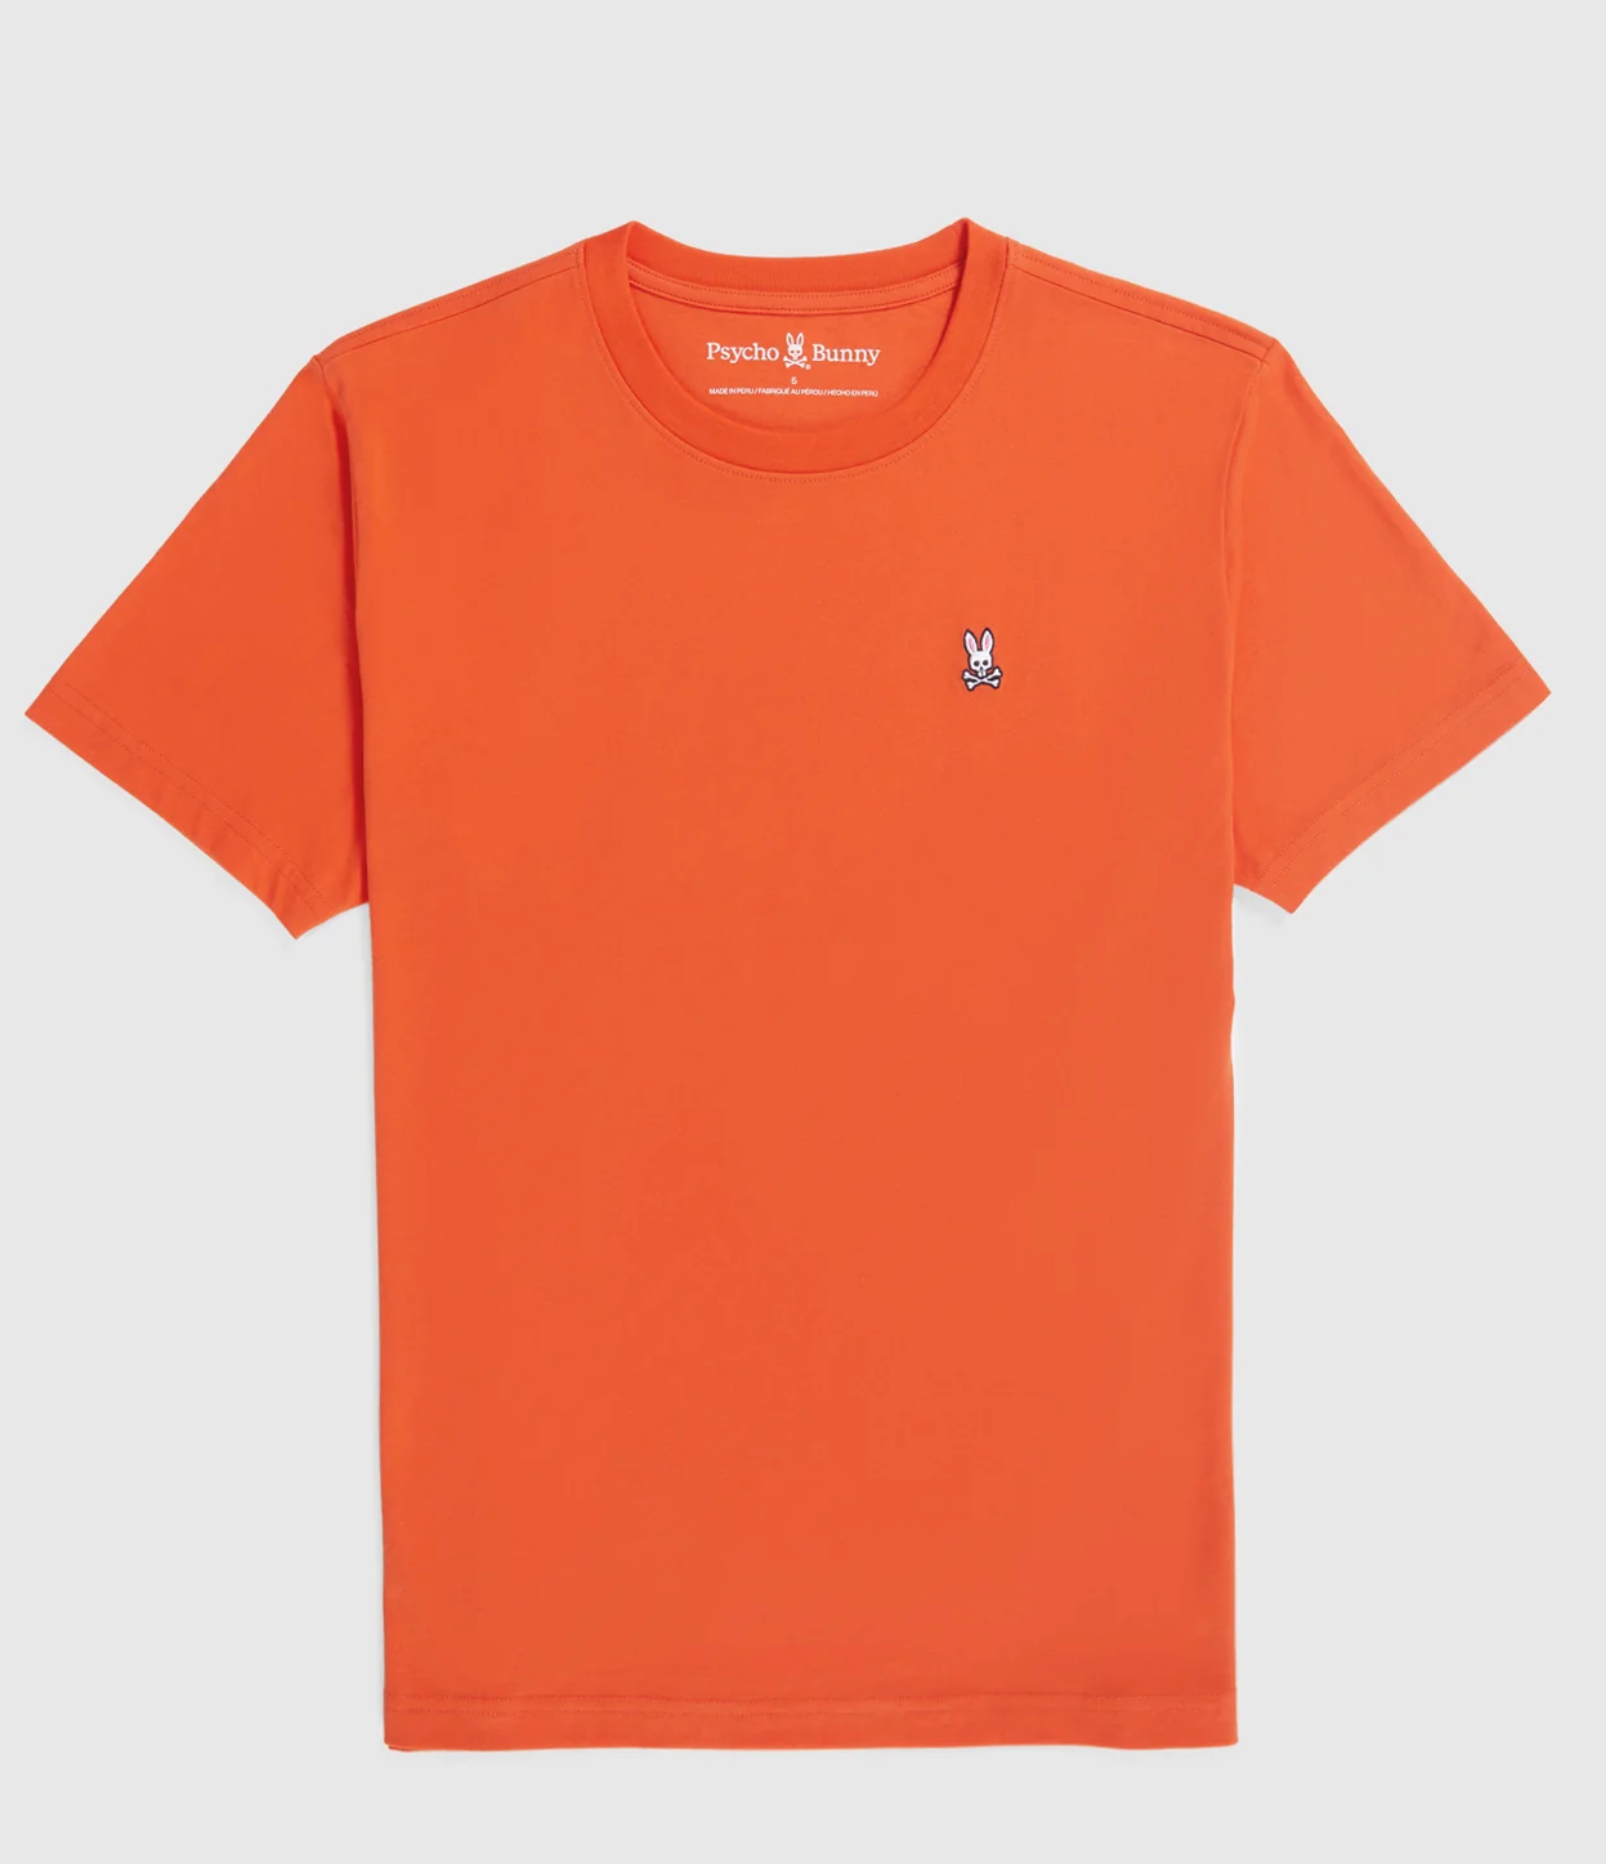 Psycho Bunny Classic T-Shirt Tango Orange